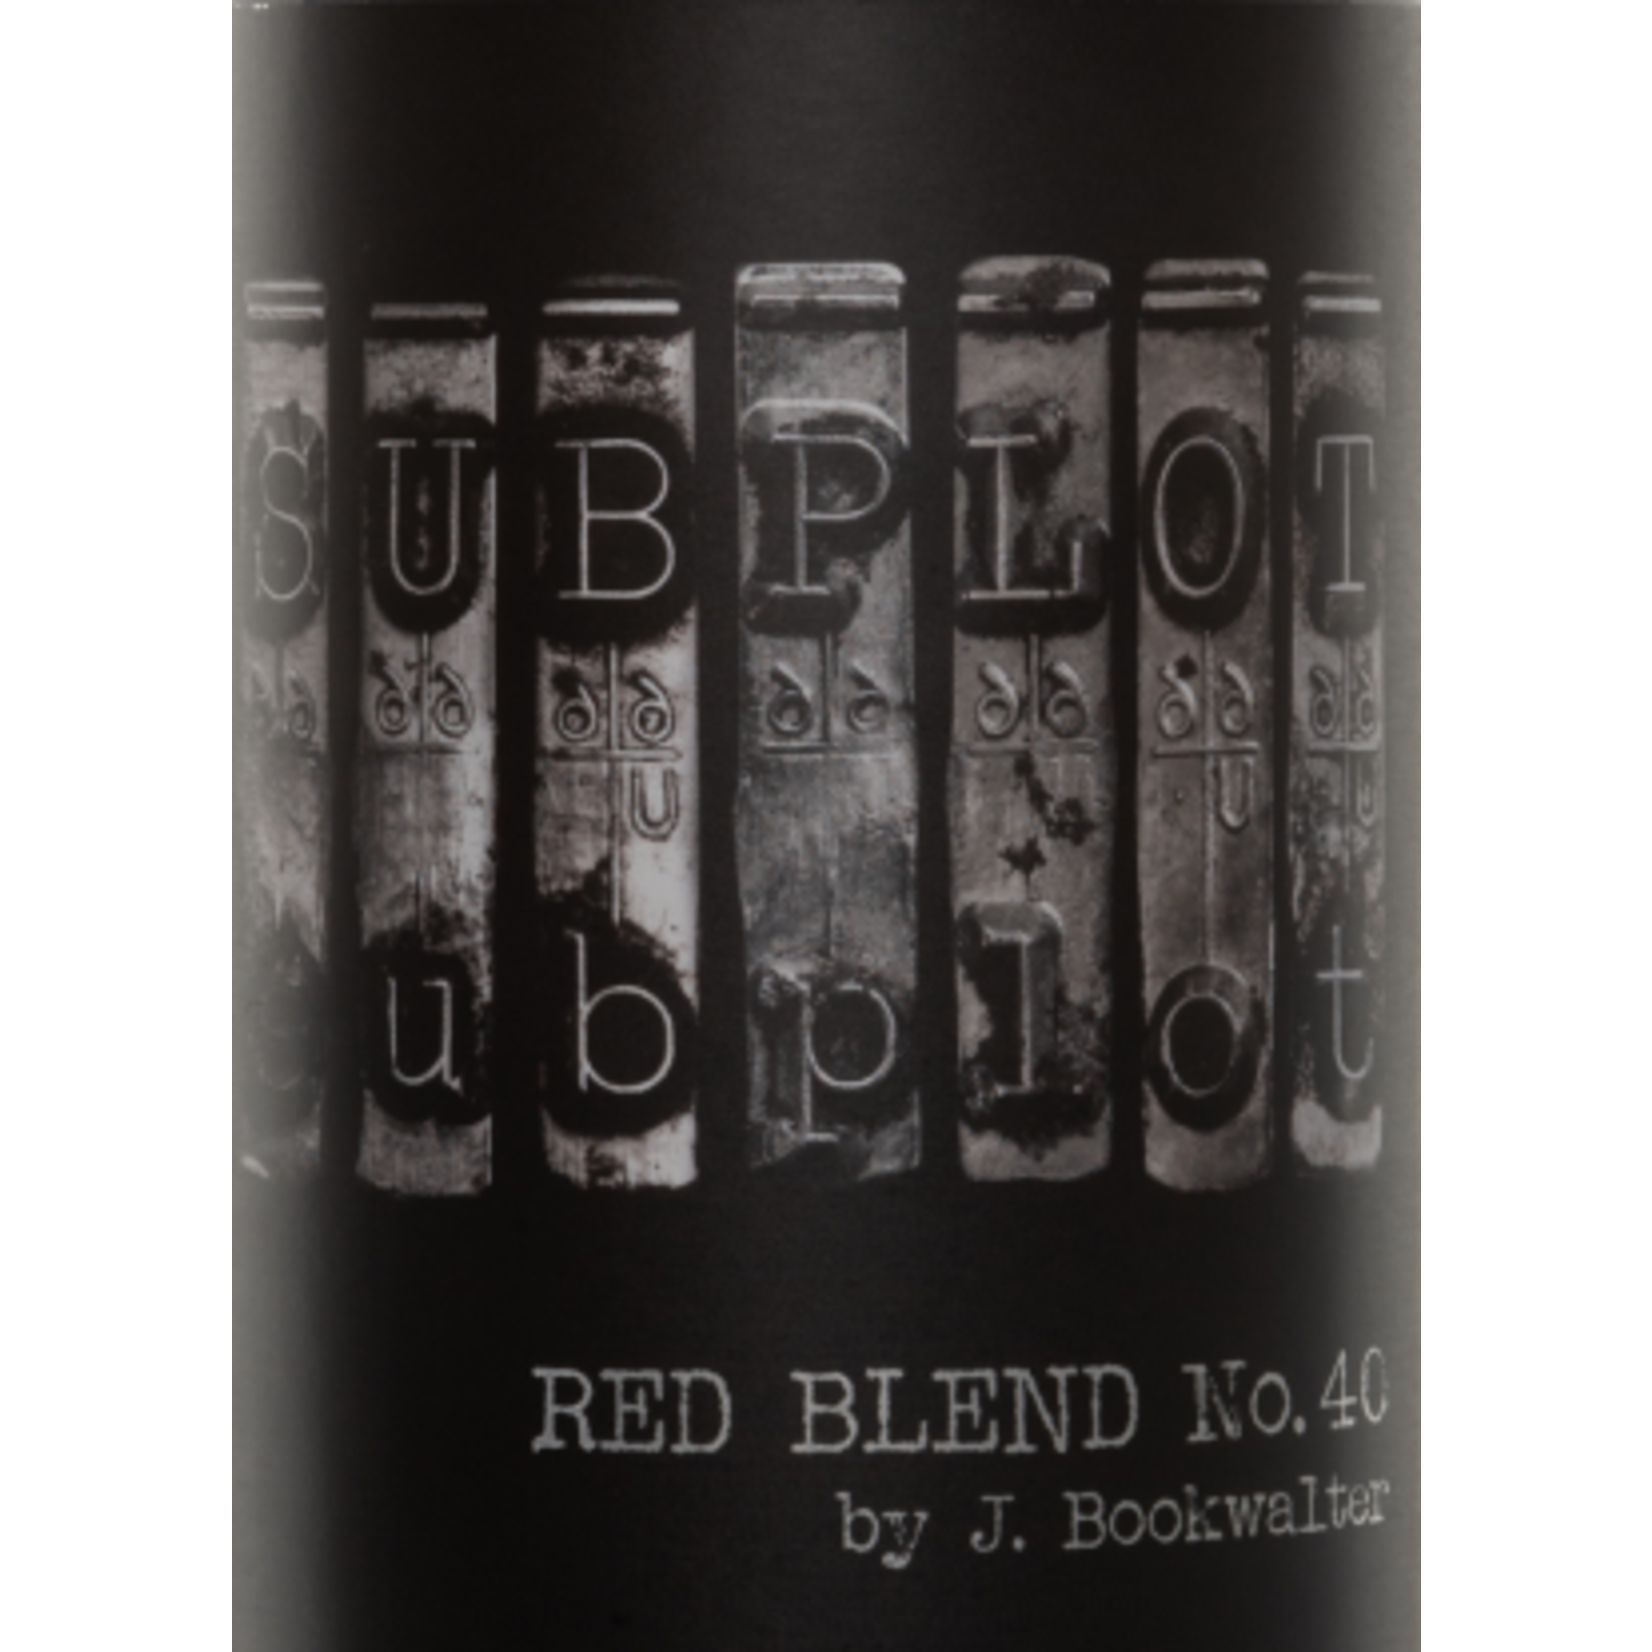 Bookwalter Winery J. Bookwalter Subplot No. 40 Red Blend  Washington